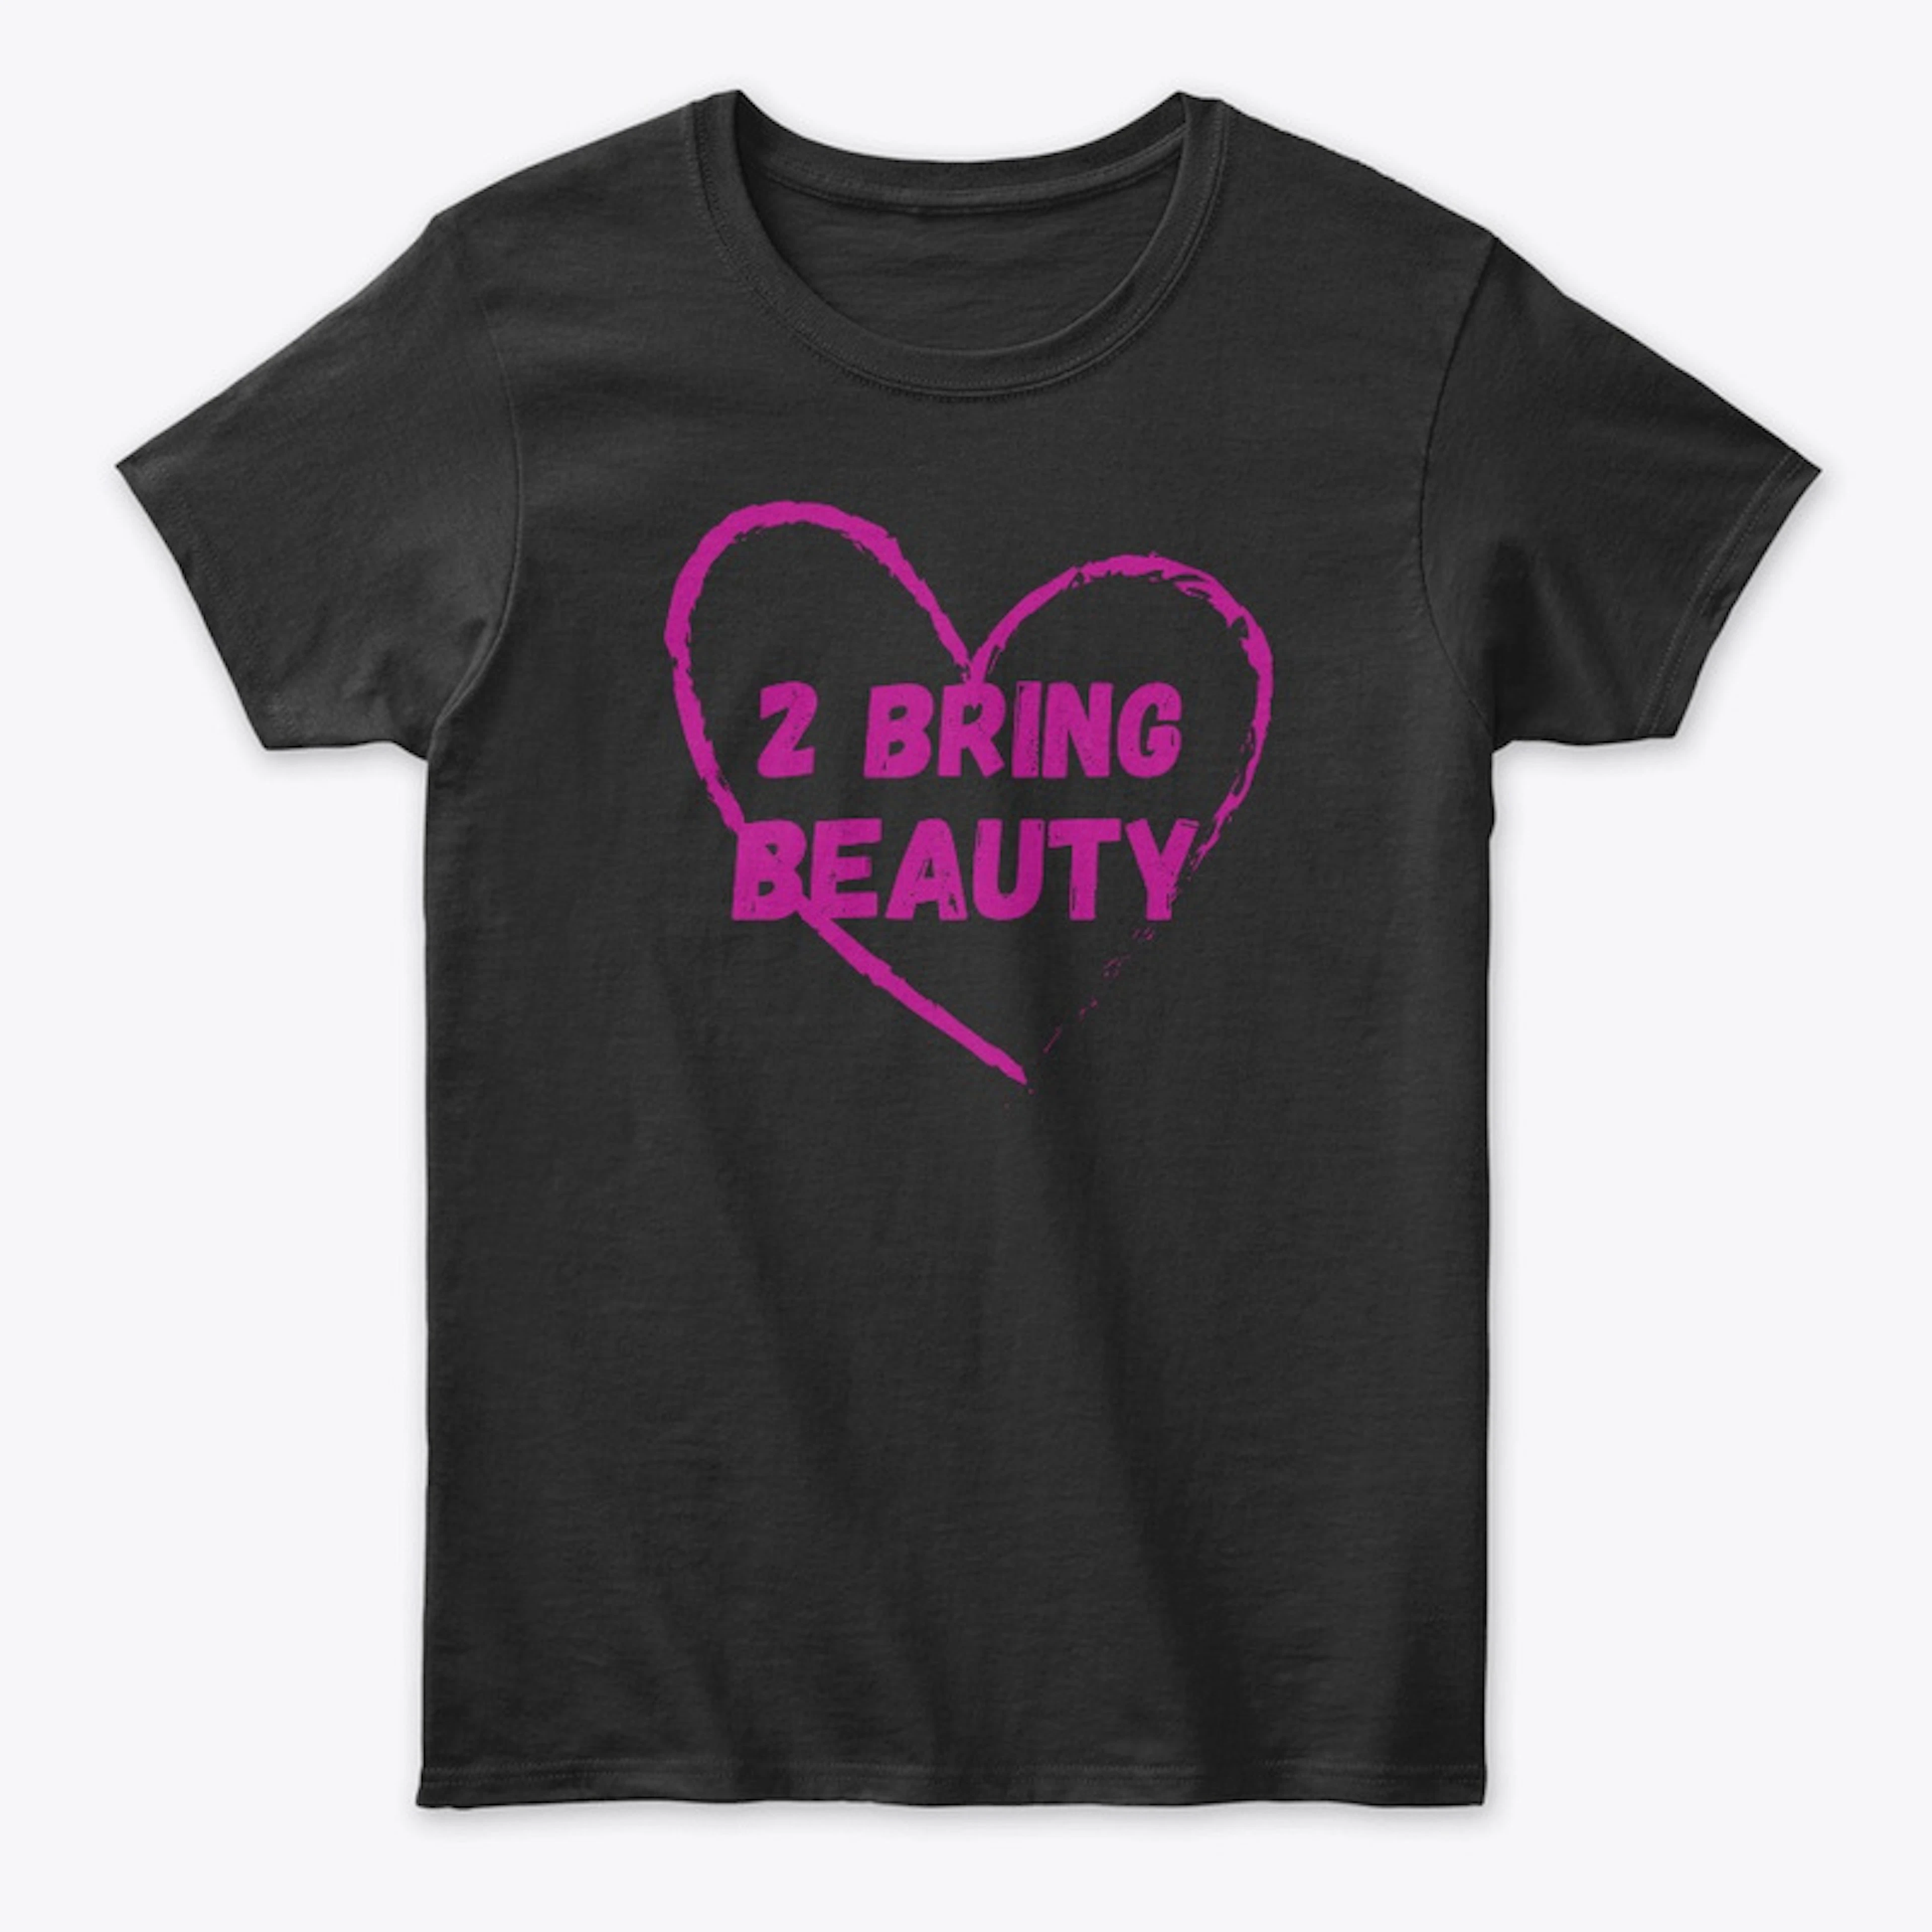 2 Bring Beauty